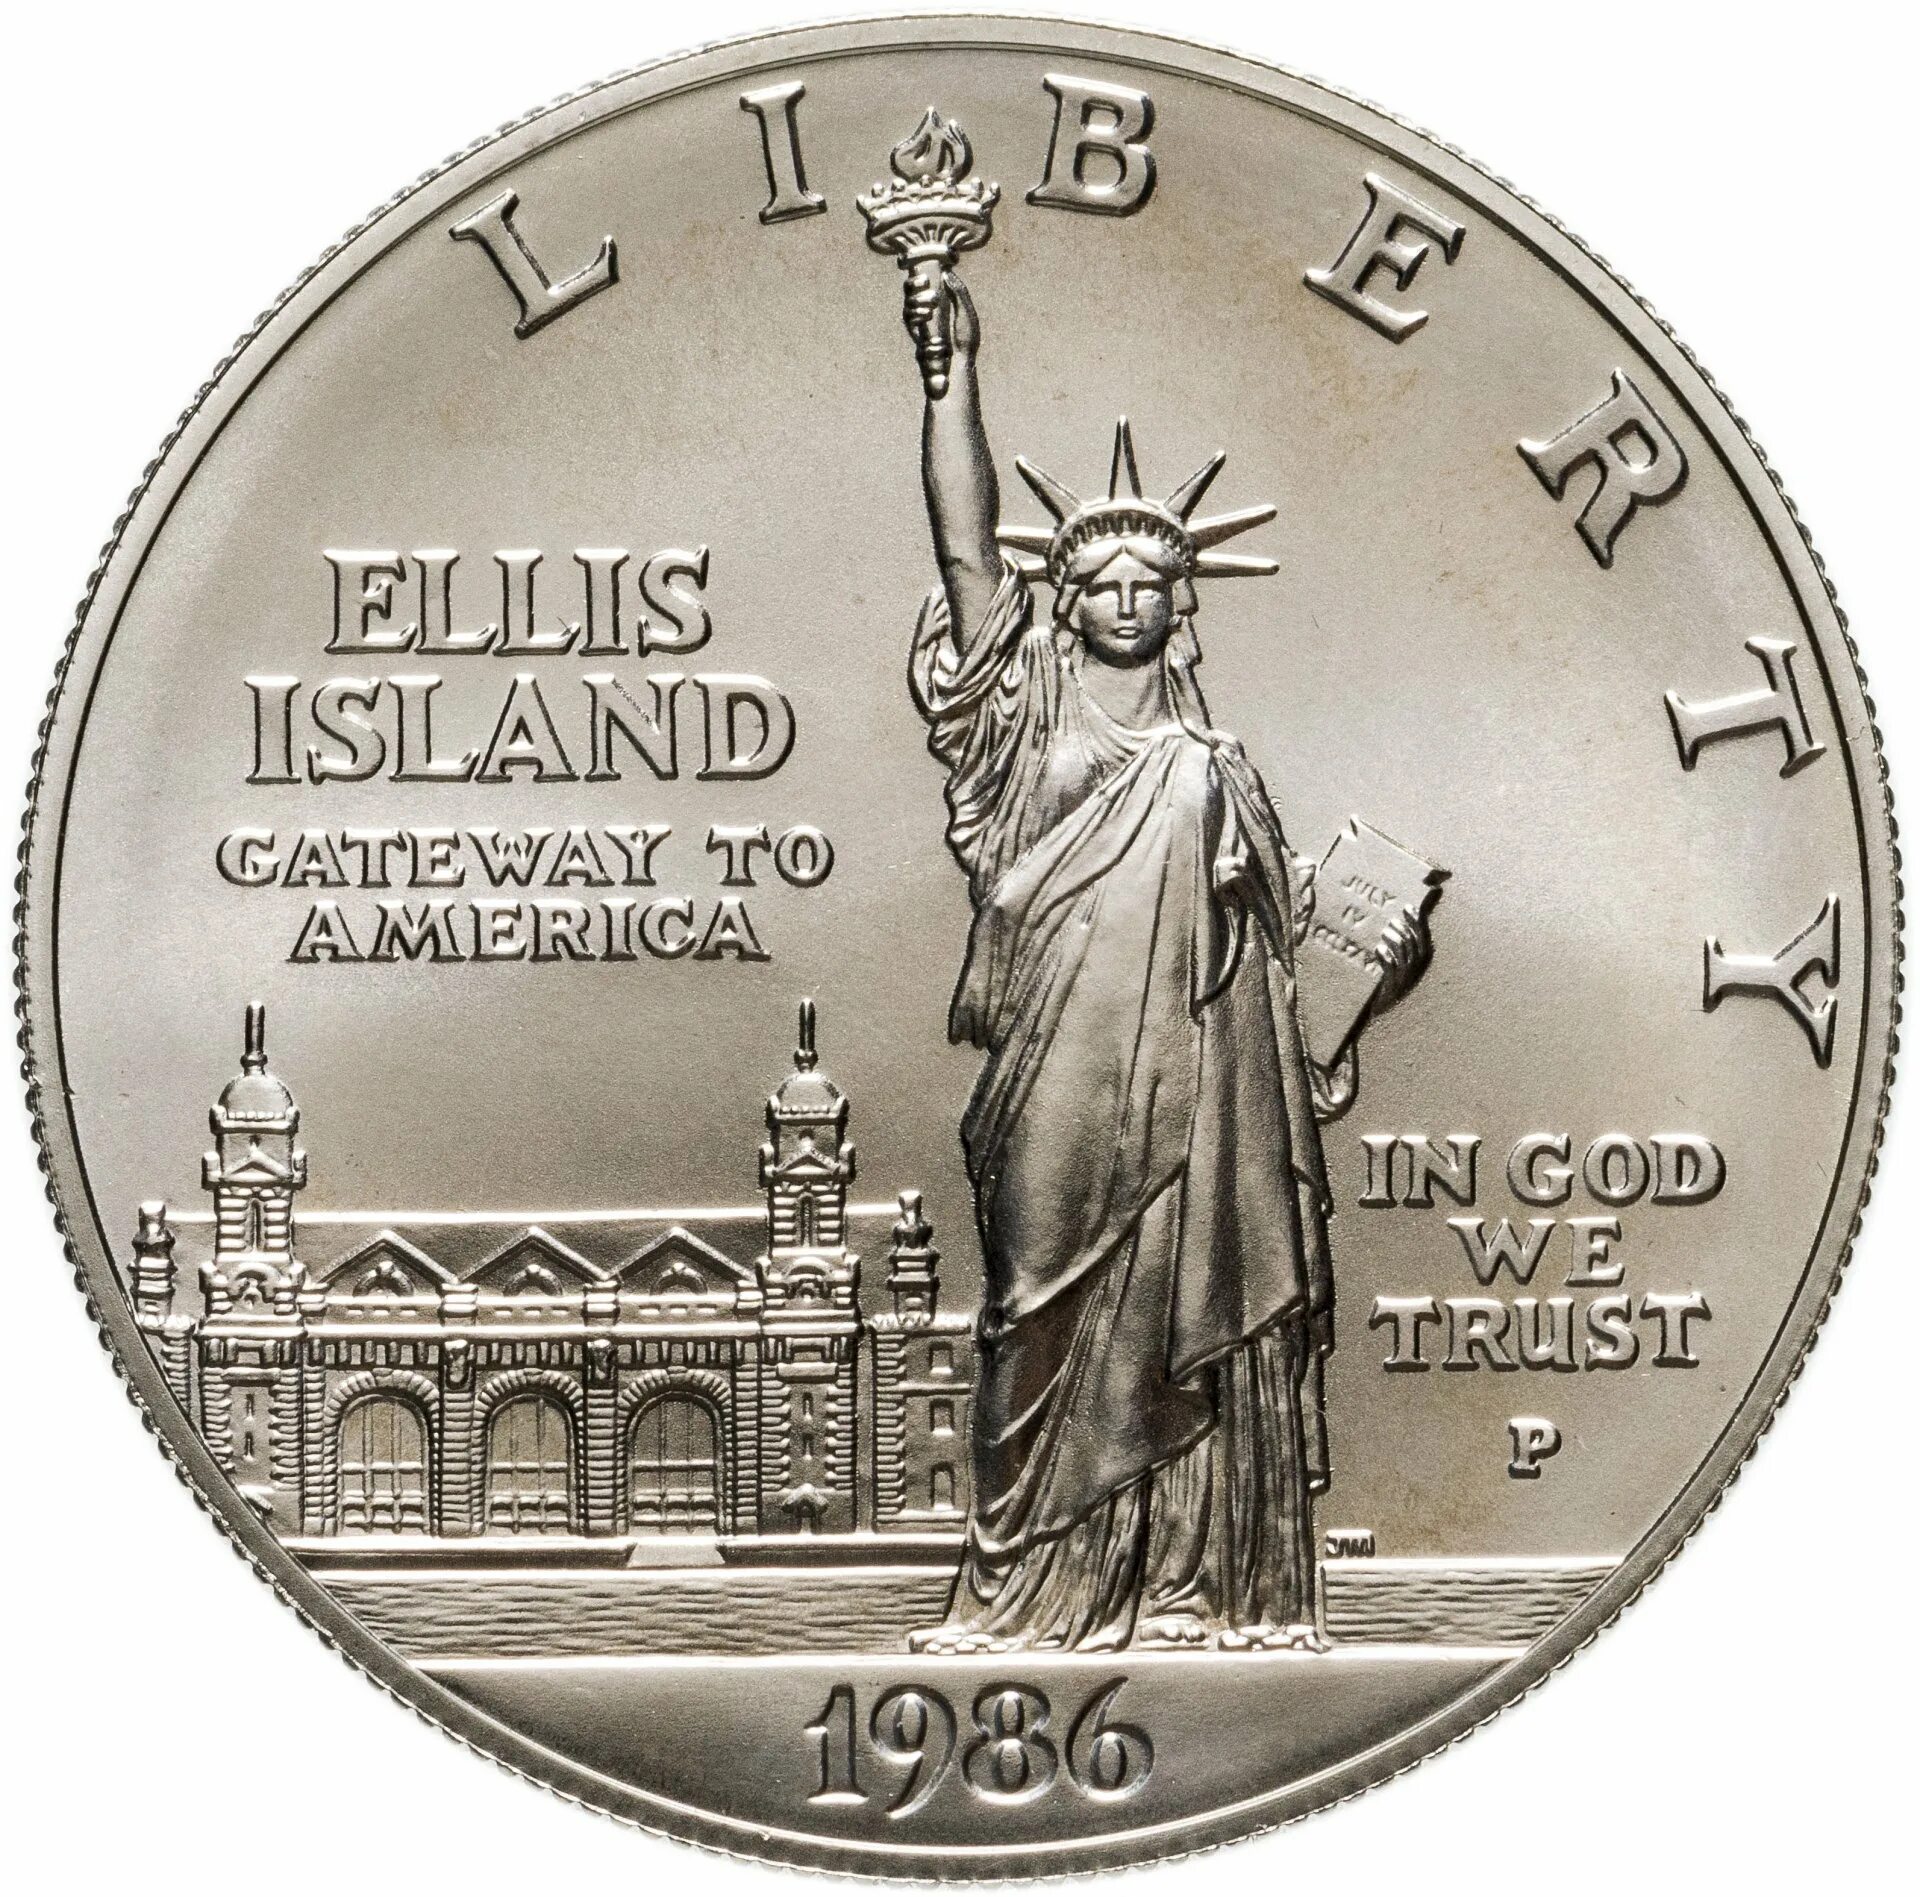 США, серебряная монета 1 доллар, 100 лет статуе свободы, 1986 года. США 1 доллар 1986 статуя. 1 Доллар Ellis Island 1986 год. 1 Доллар 1986 США монета. 1 доллар работа